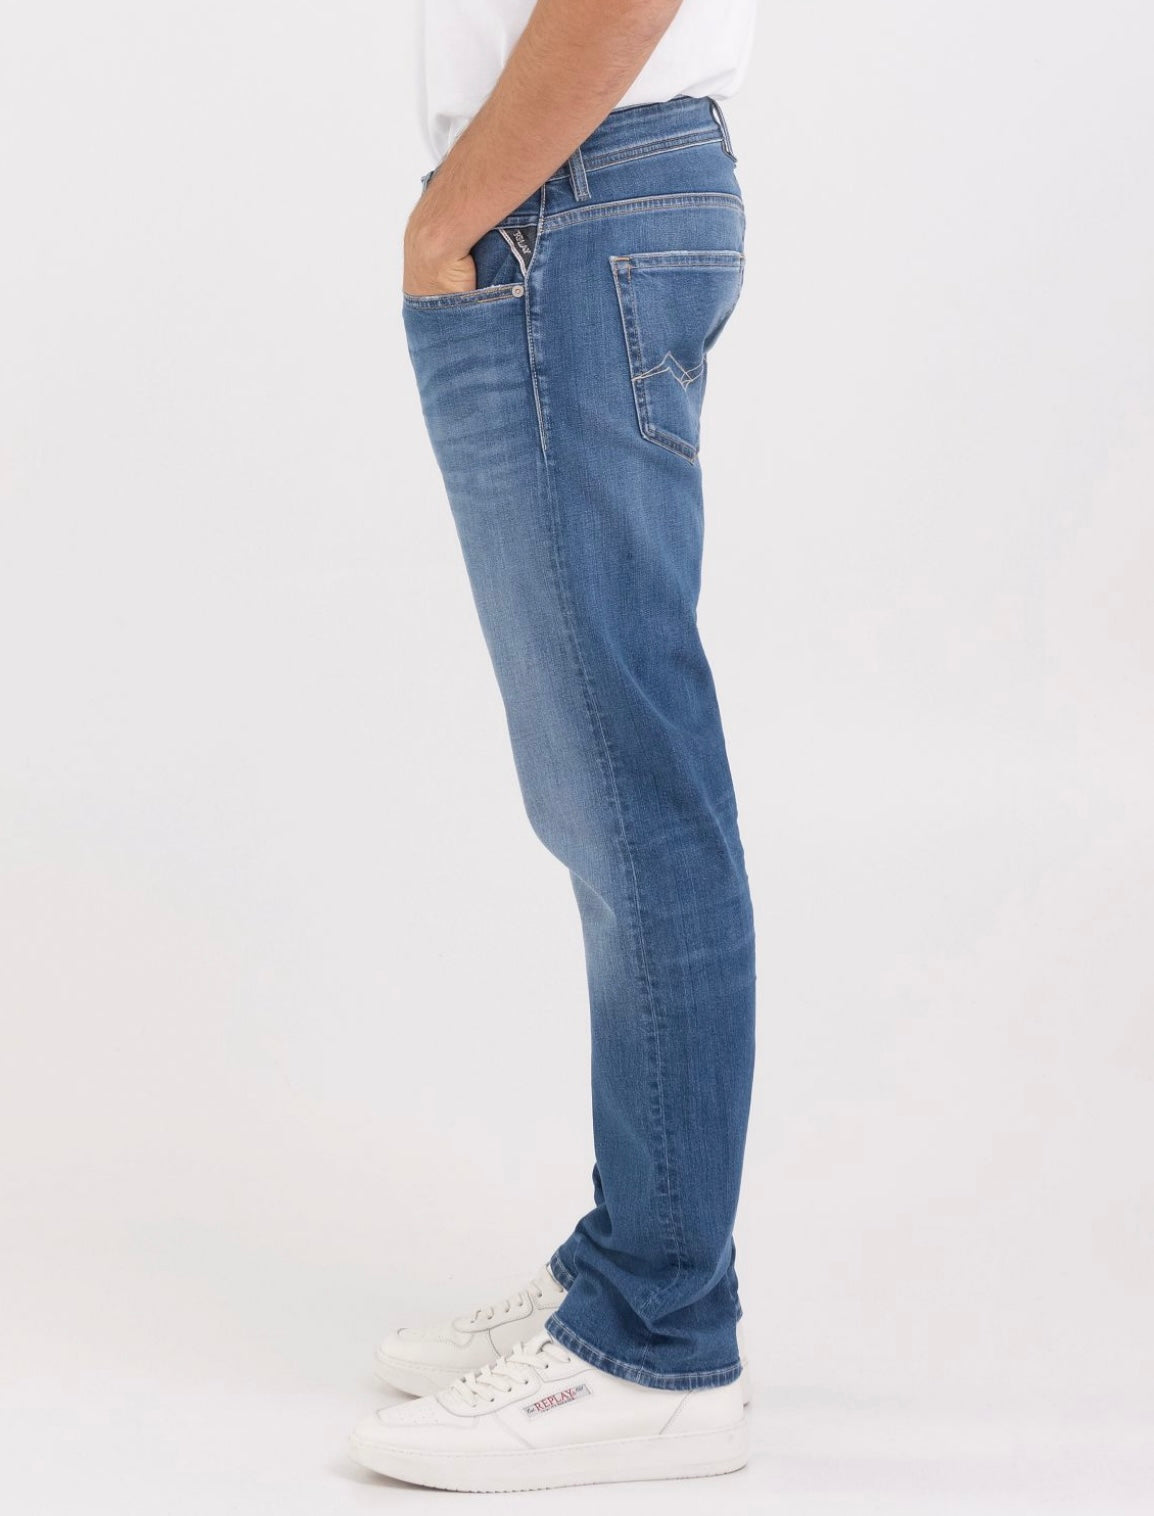 Replay Hyperflex Grover jeans - 573 602 009